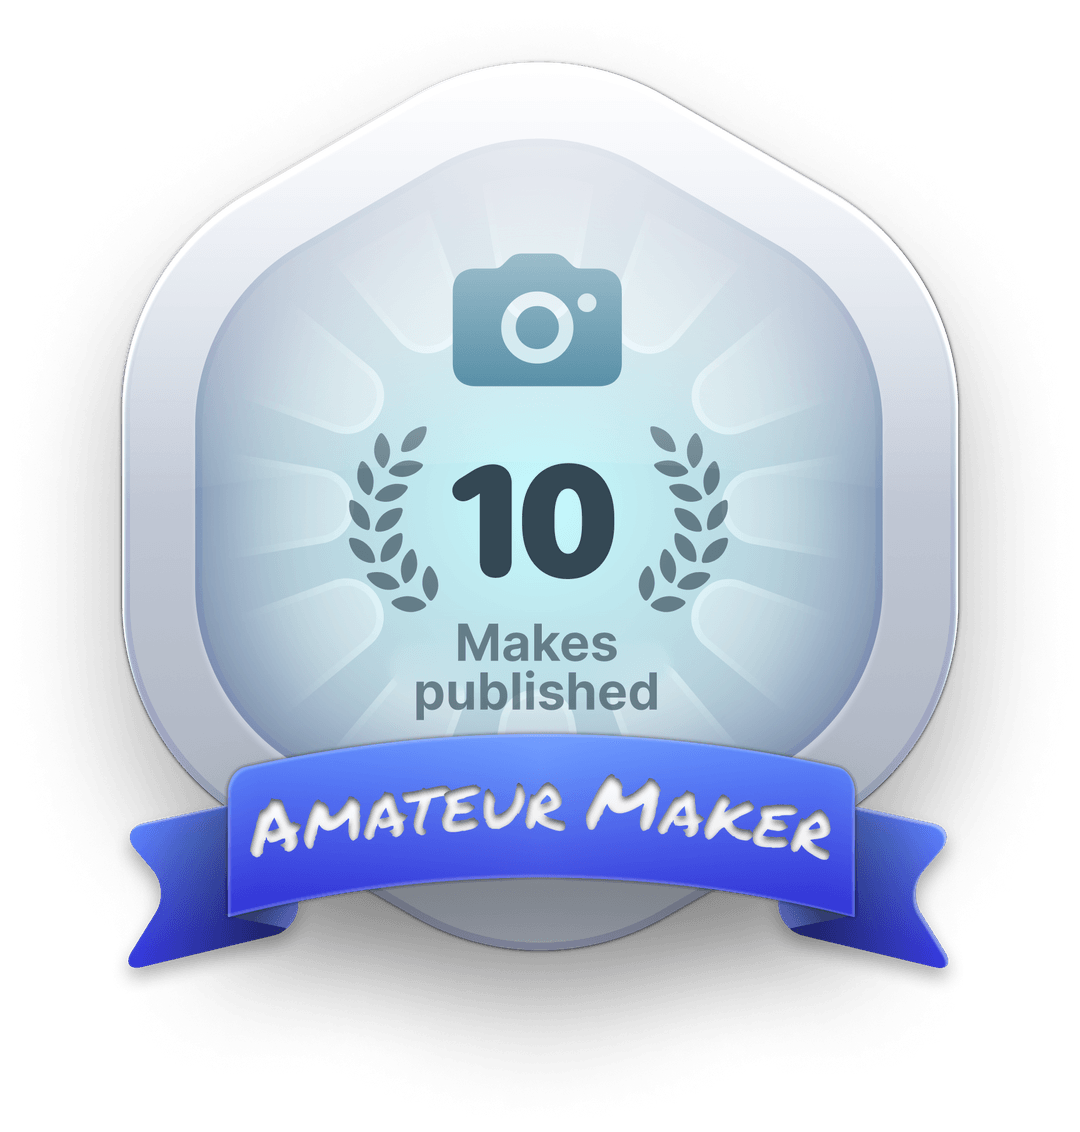 10 Makes published